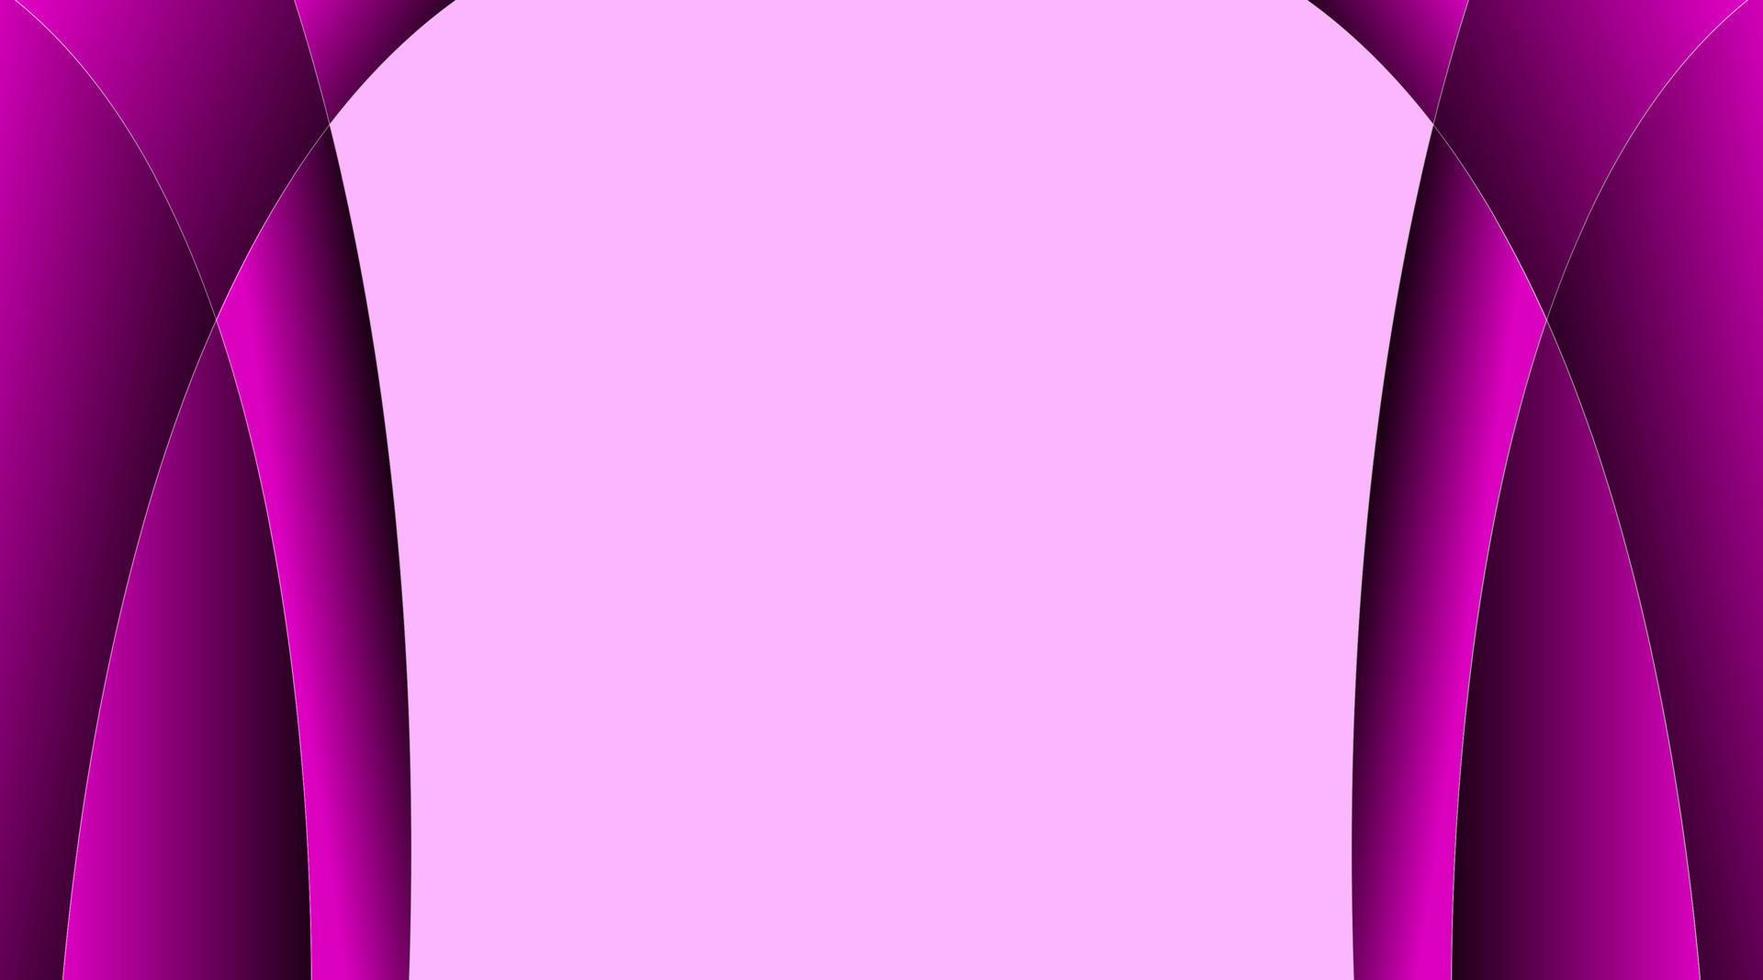 vector de fondo abstracto, forma de degradado púrpura